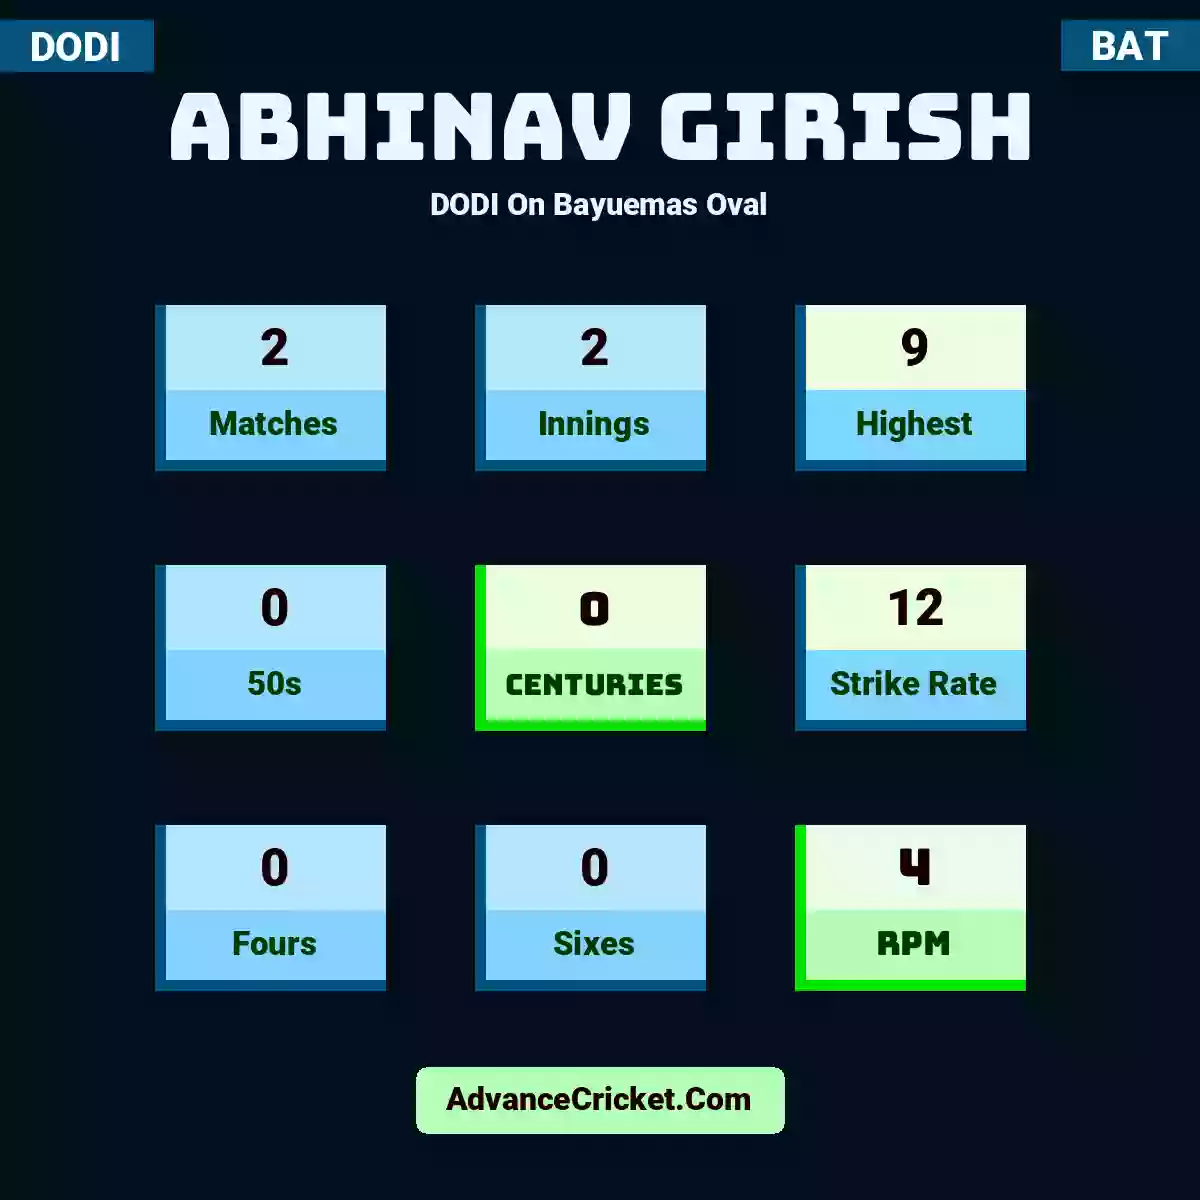 Abhinav Girish DODI  On Bayuemas Oval, Abhinav Girish played 2 matches, scored 9 runs as highest, 0 half-centuries, and 0 centuries, with a strike rate of 12. A.Girish hit 0 fours and 0 sixes, with an RPM of 4.